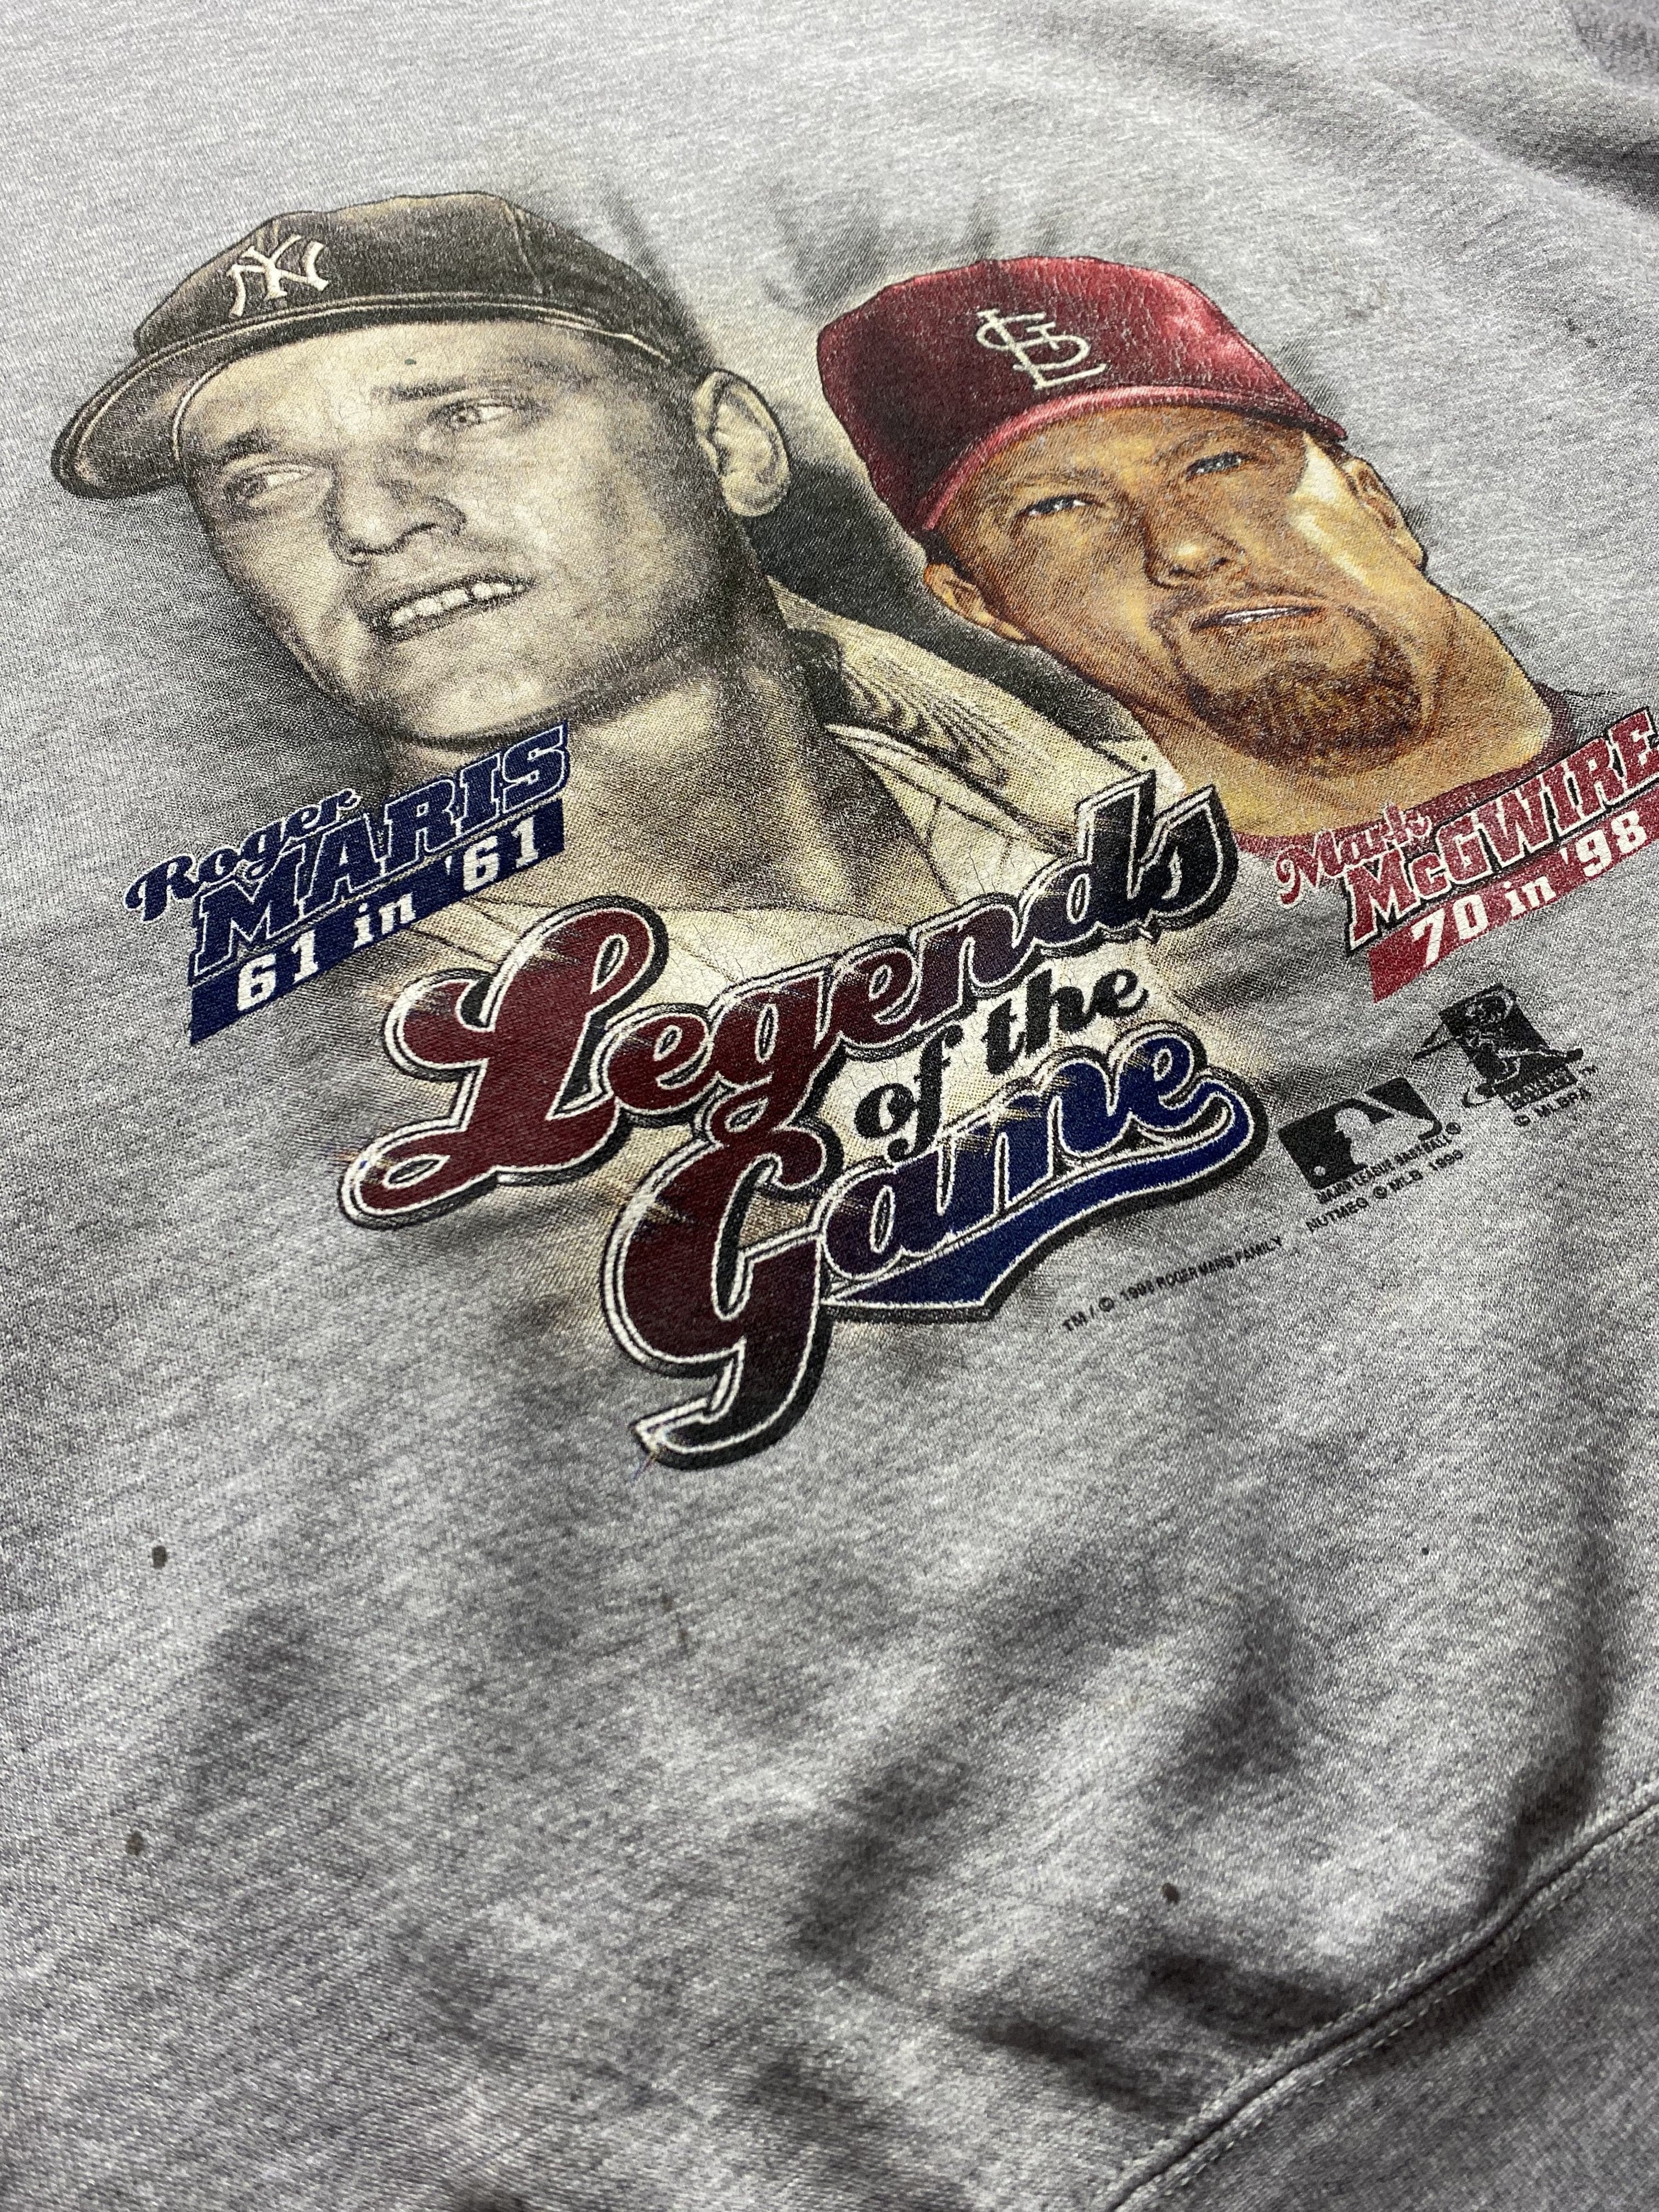 MLB Legends of the Game Sweatshirt Grey // X-Large - RHAGHOUSE VINTAGE